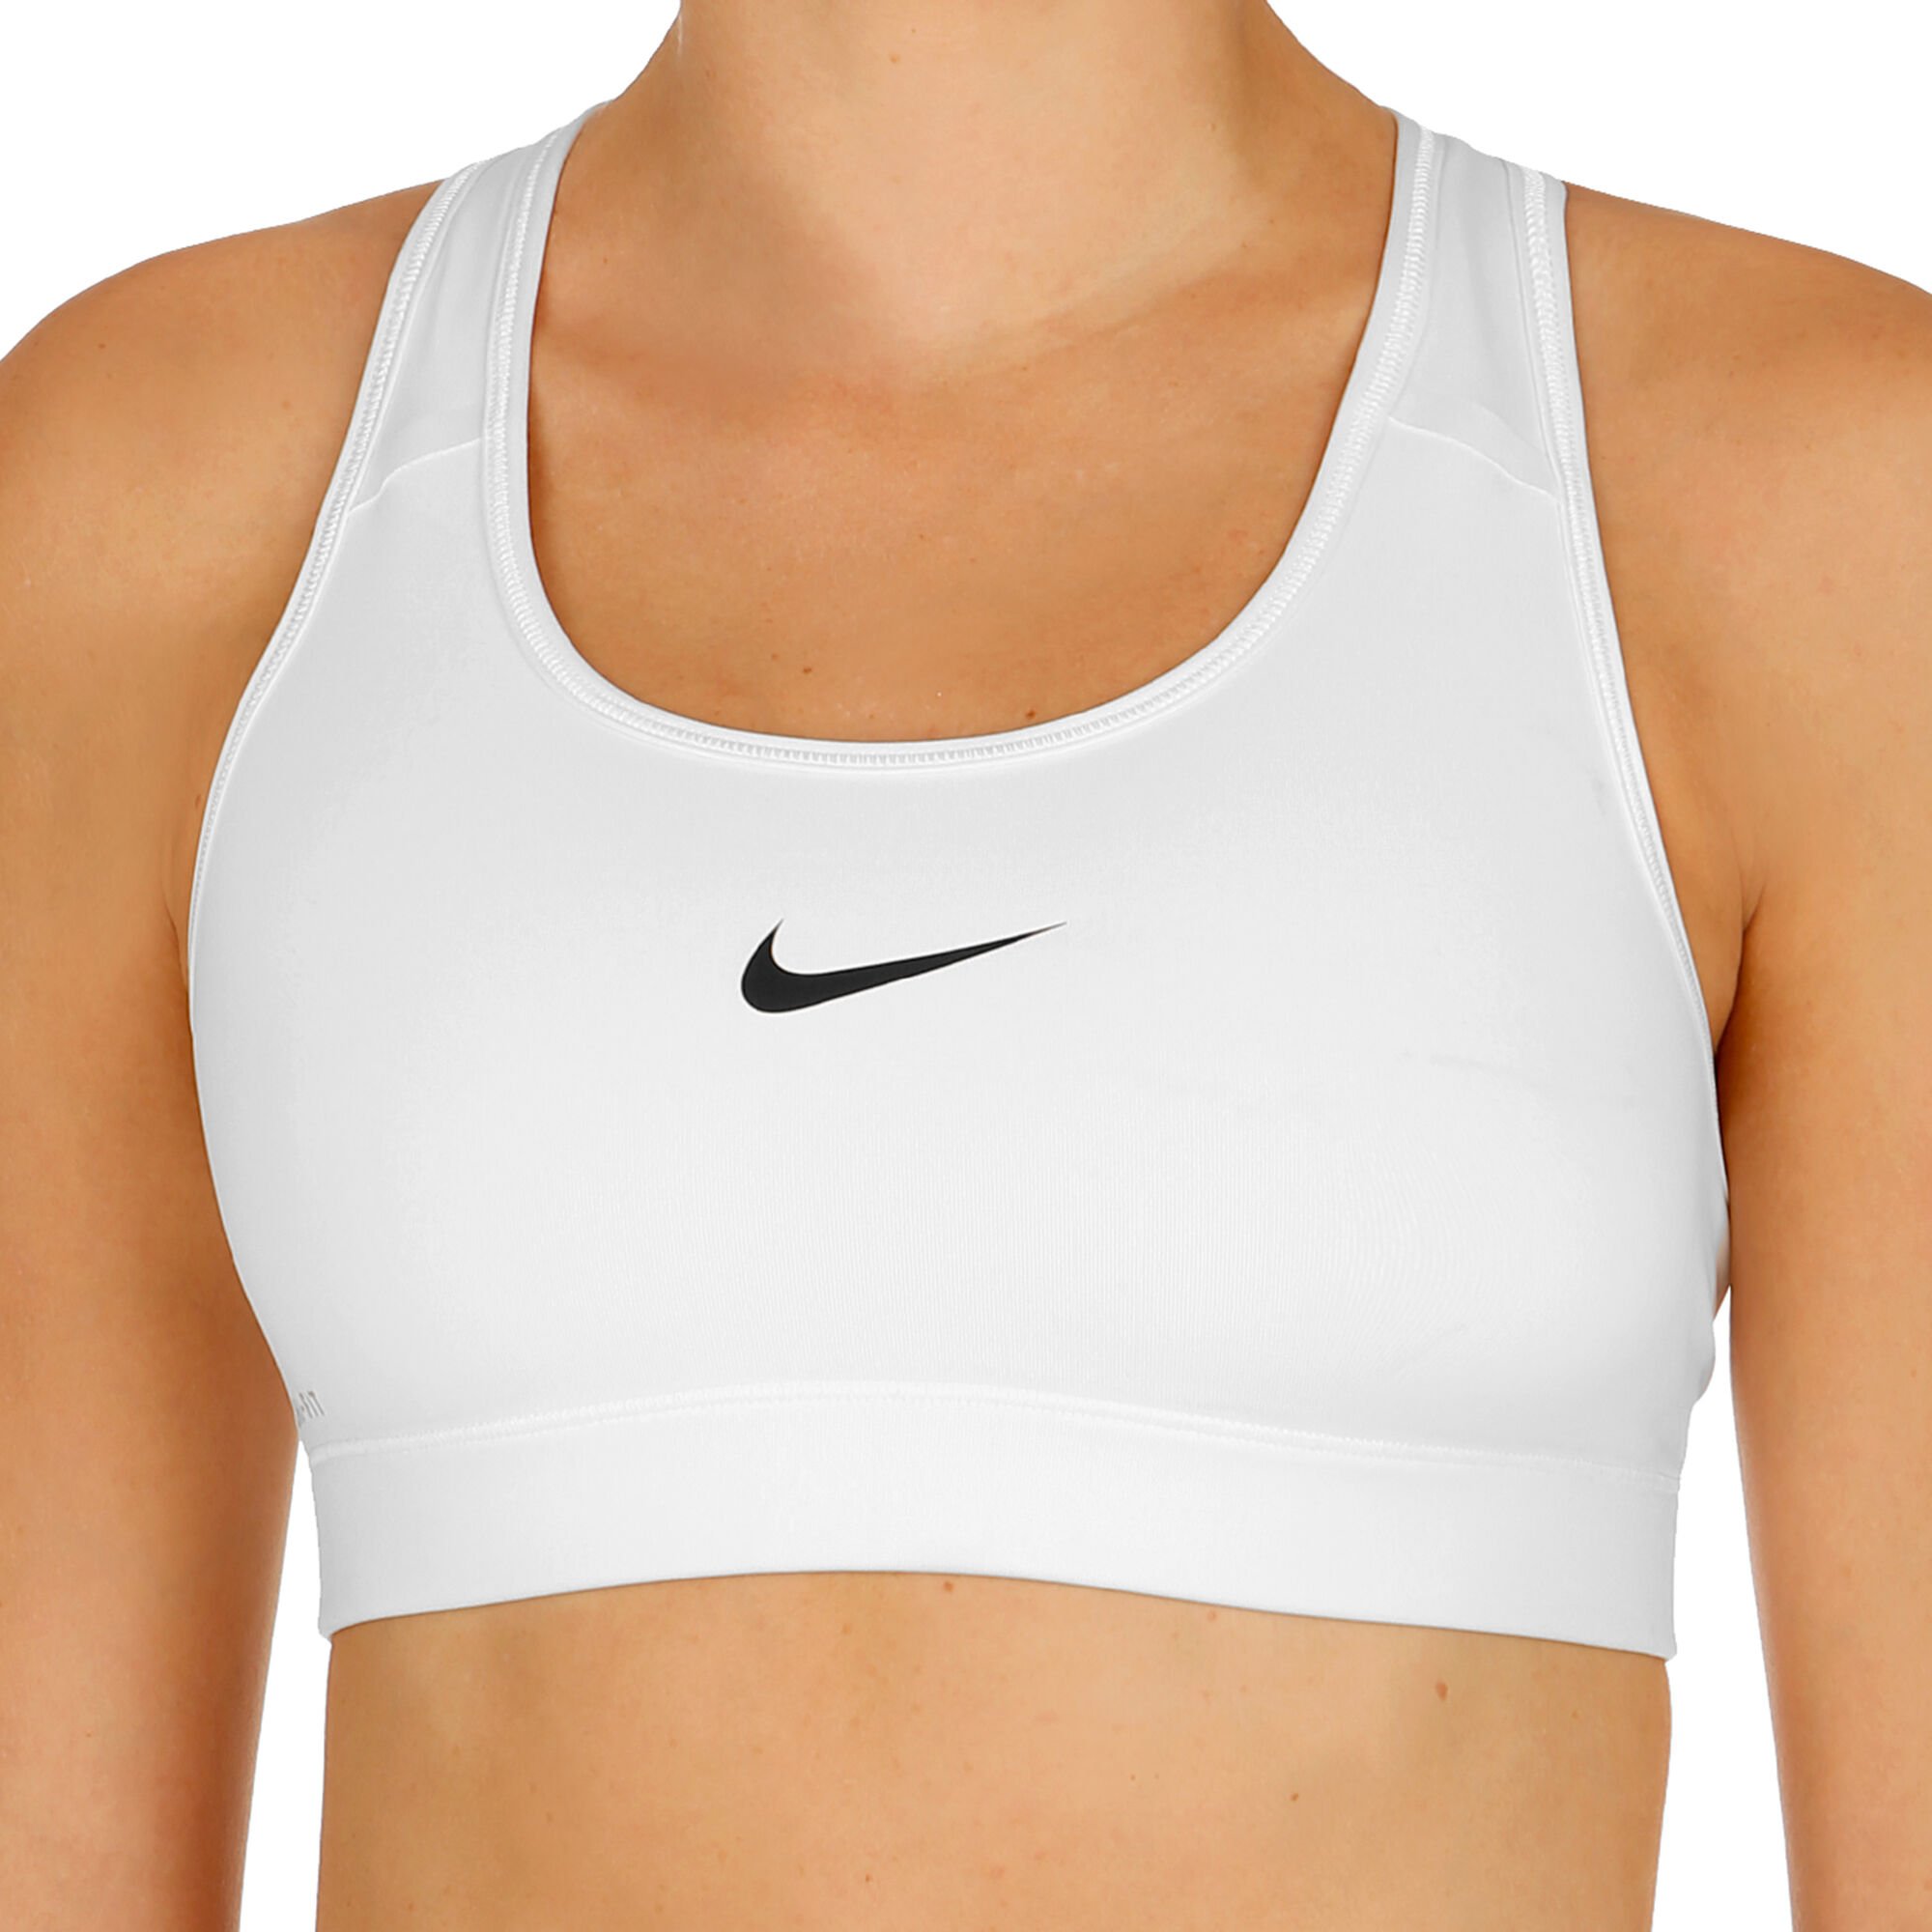 Buy Nike Victory Compression Sports Bras Women White, Black online